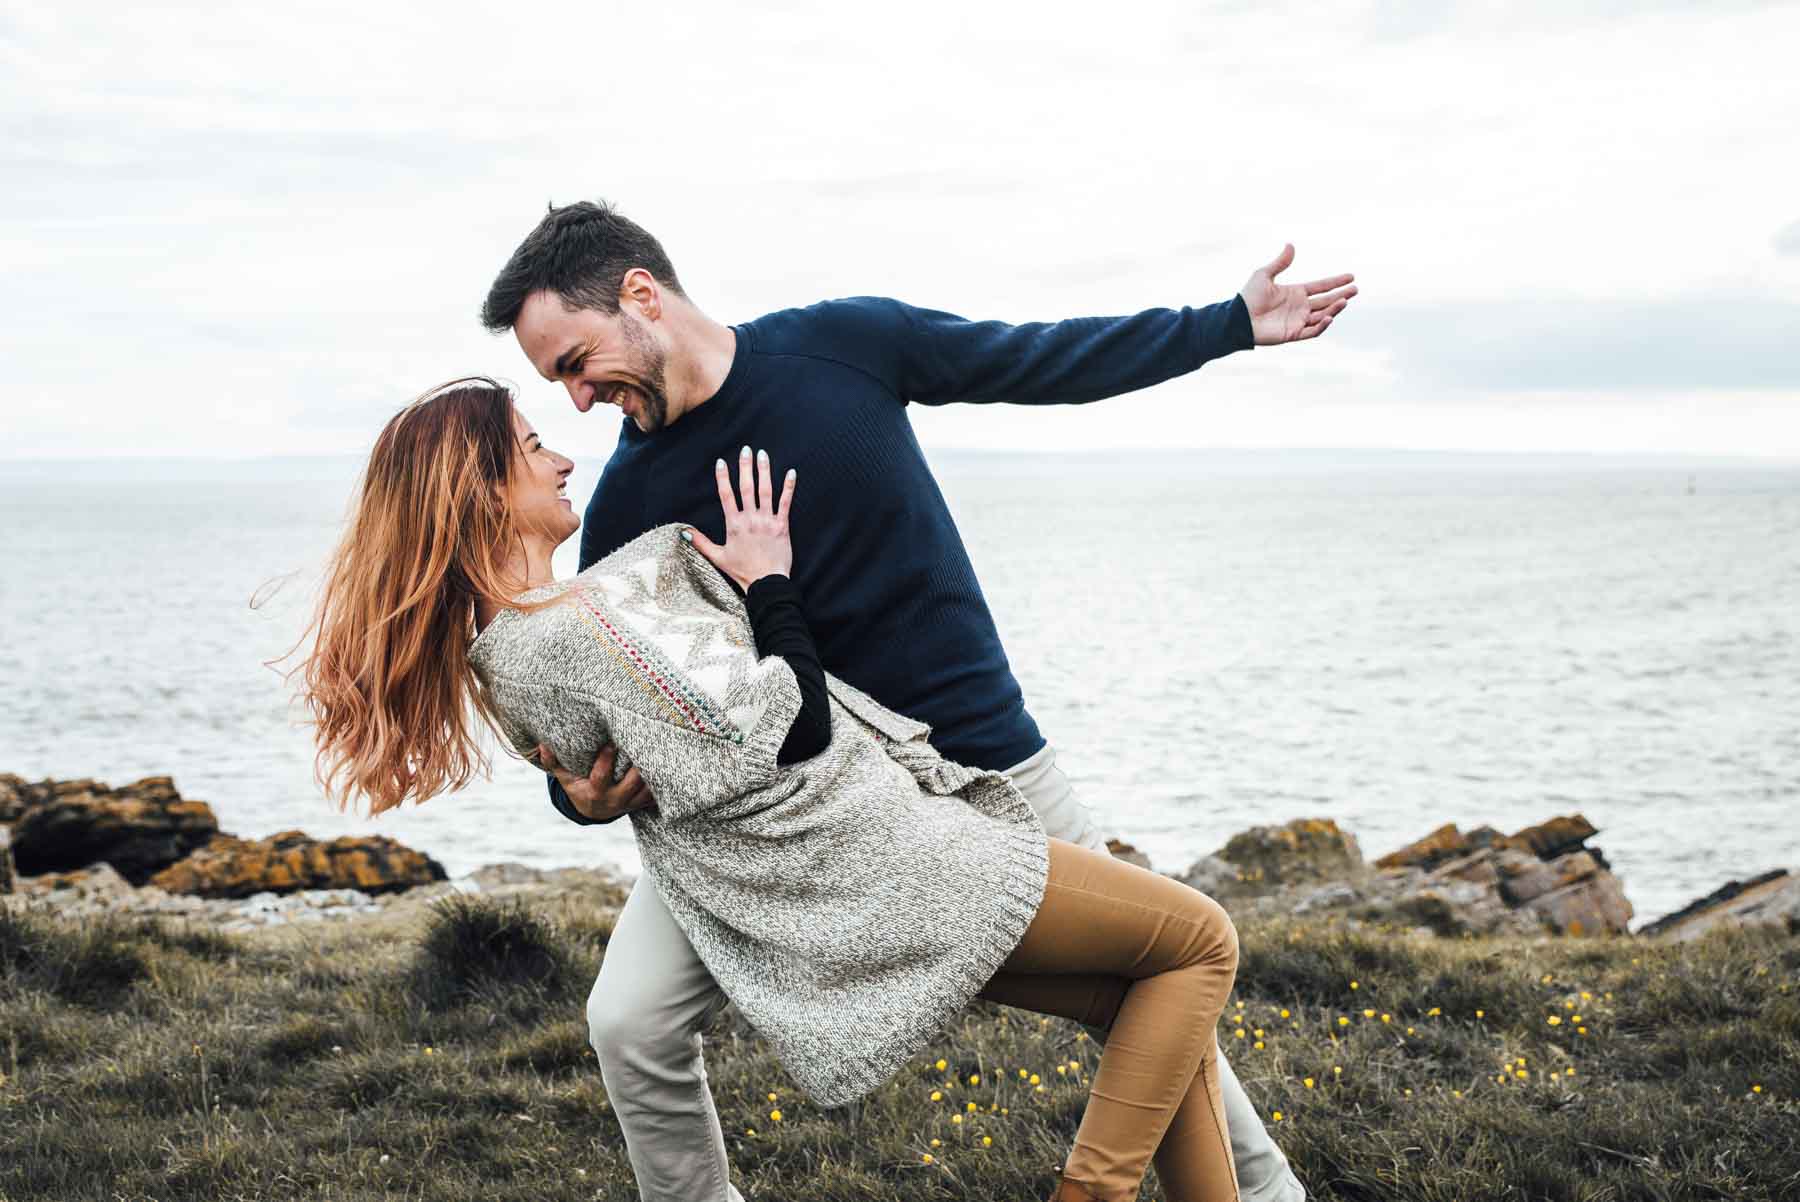 Couple Photoshoot - Wedding Photography Couple dances on the rocks by the sea